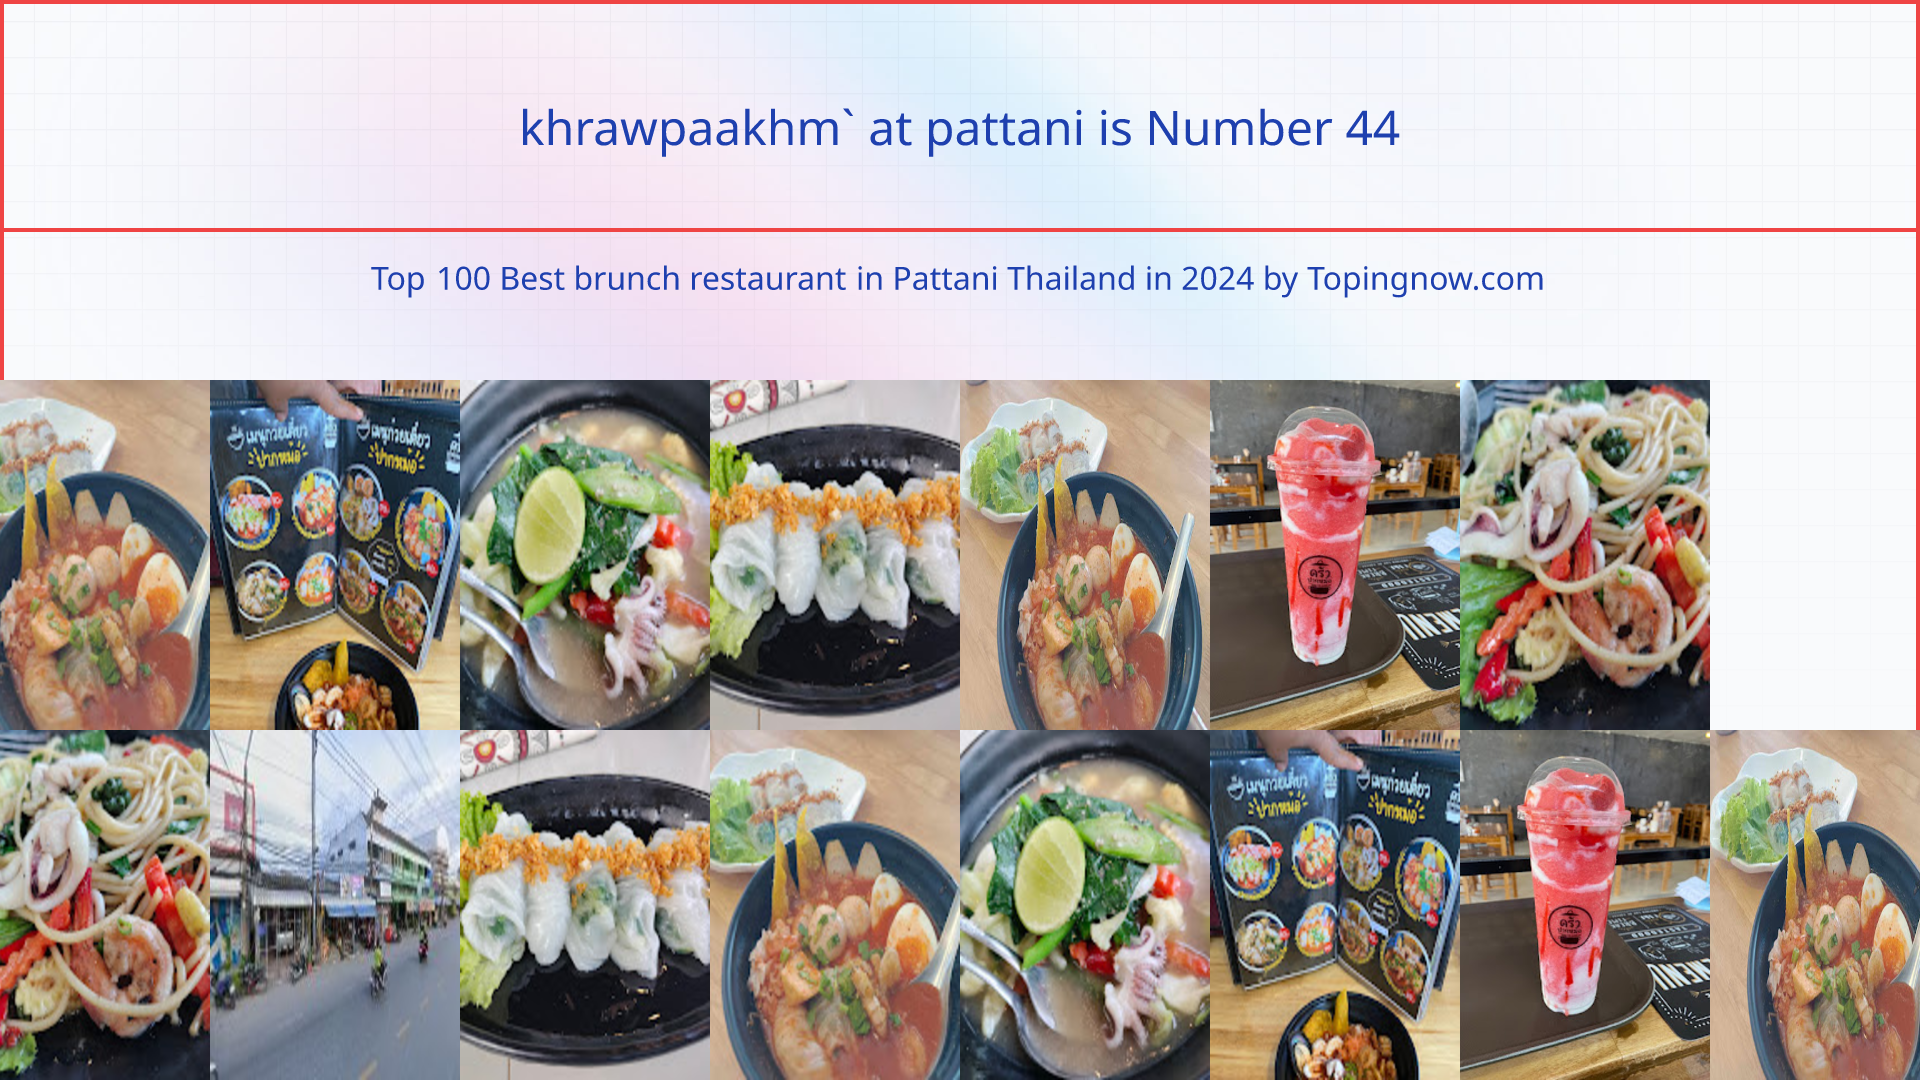 khrawpaakhm` at pattani: Top 100 Best brunch restaurant in Pattani Thailand in 2024